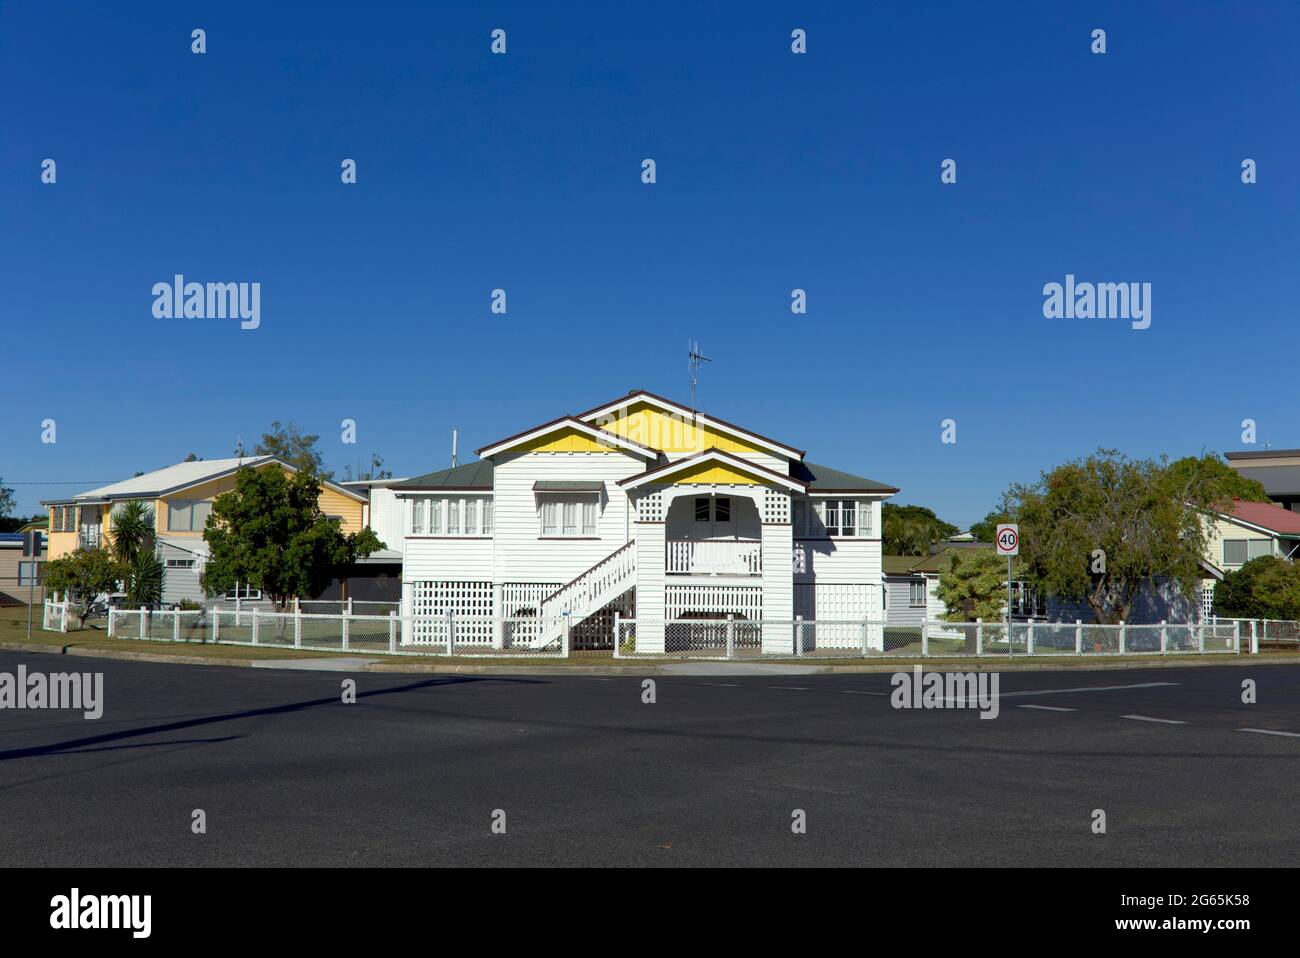 Queenslander style house at Burrum Heads Fraser Coast Queensland Australia Stock Photo